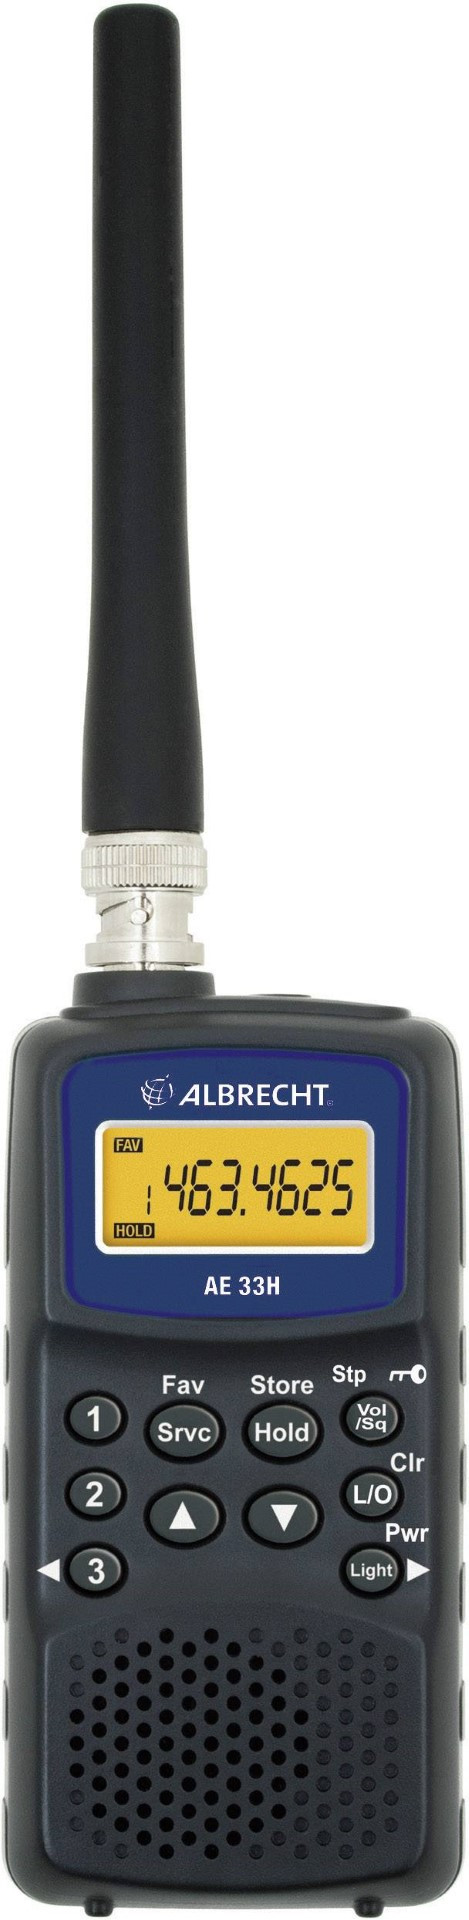 Ricevitore scanner portatile Albrecht 27033 AE 33 H